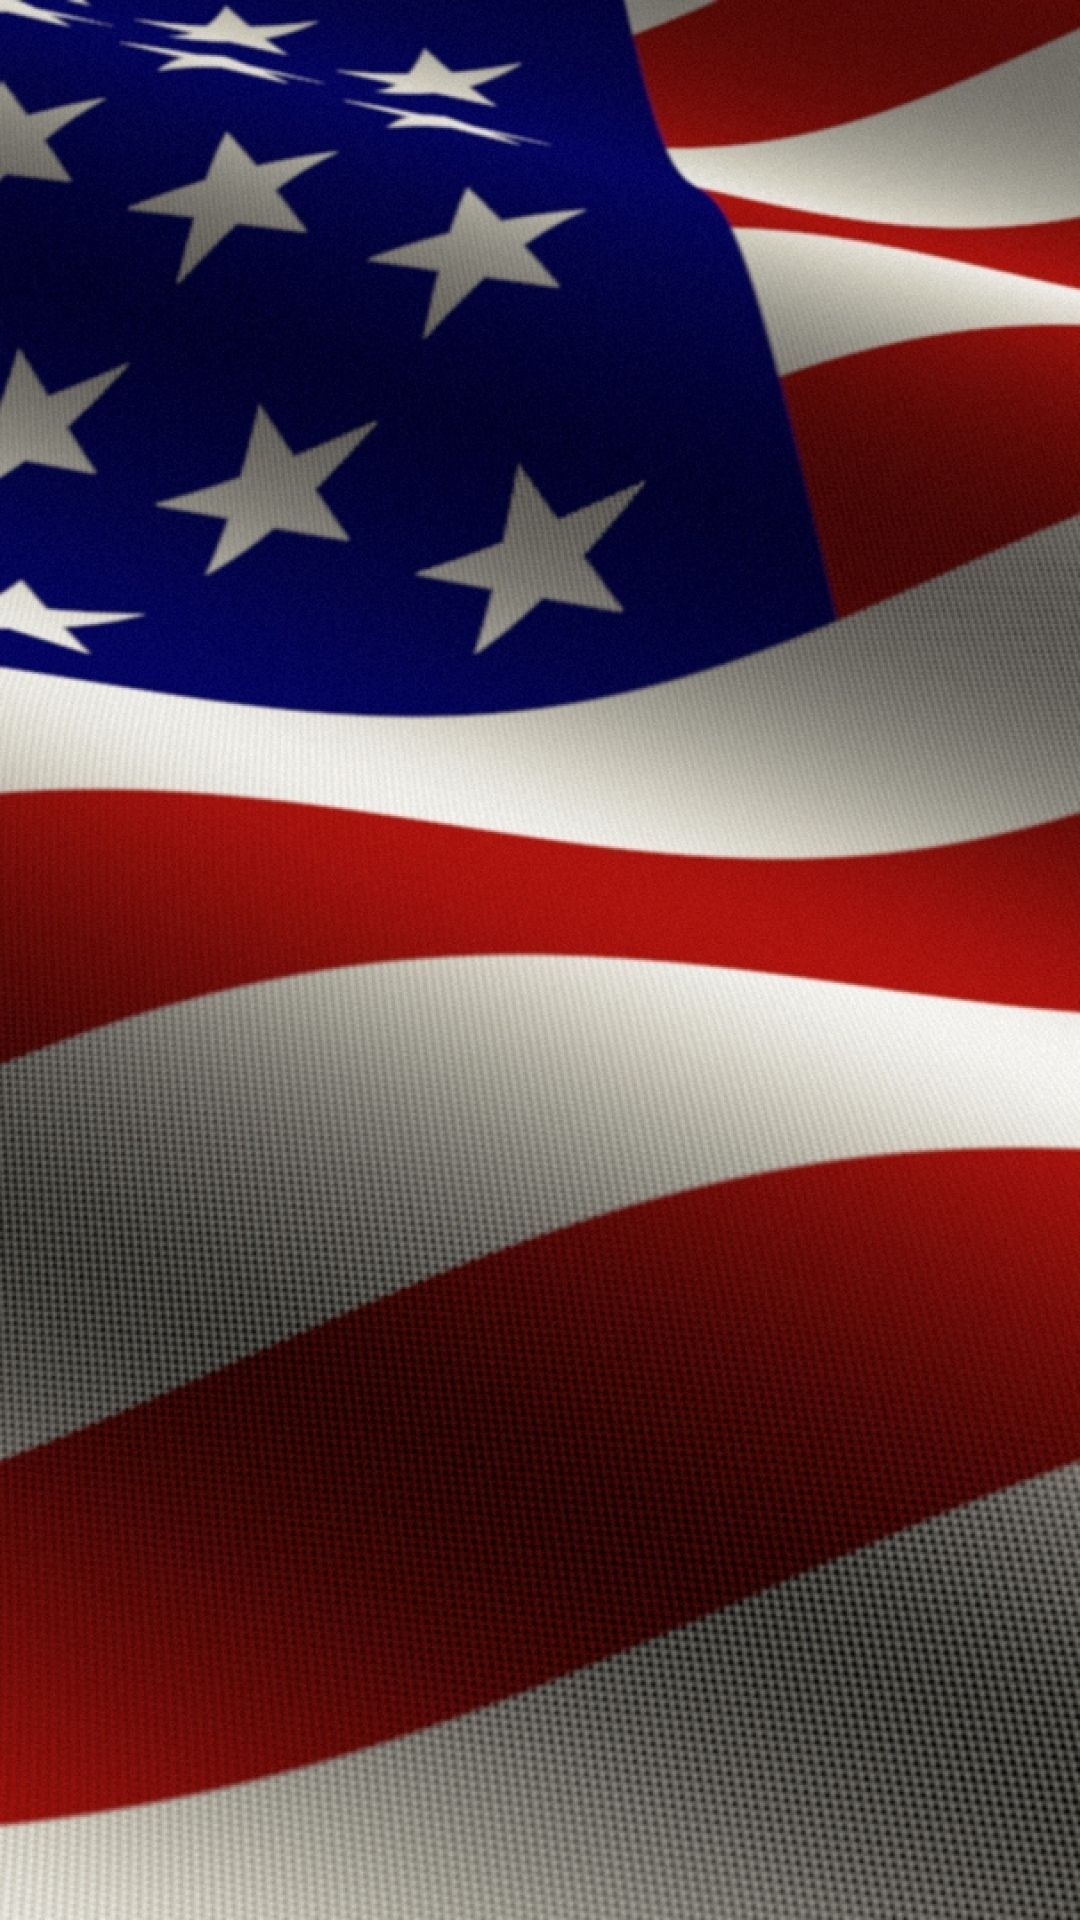 AMOLED American Flag wallpaper by Binarybadboy  Download on ZEDGE  c89d